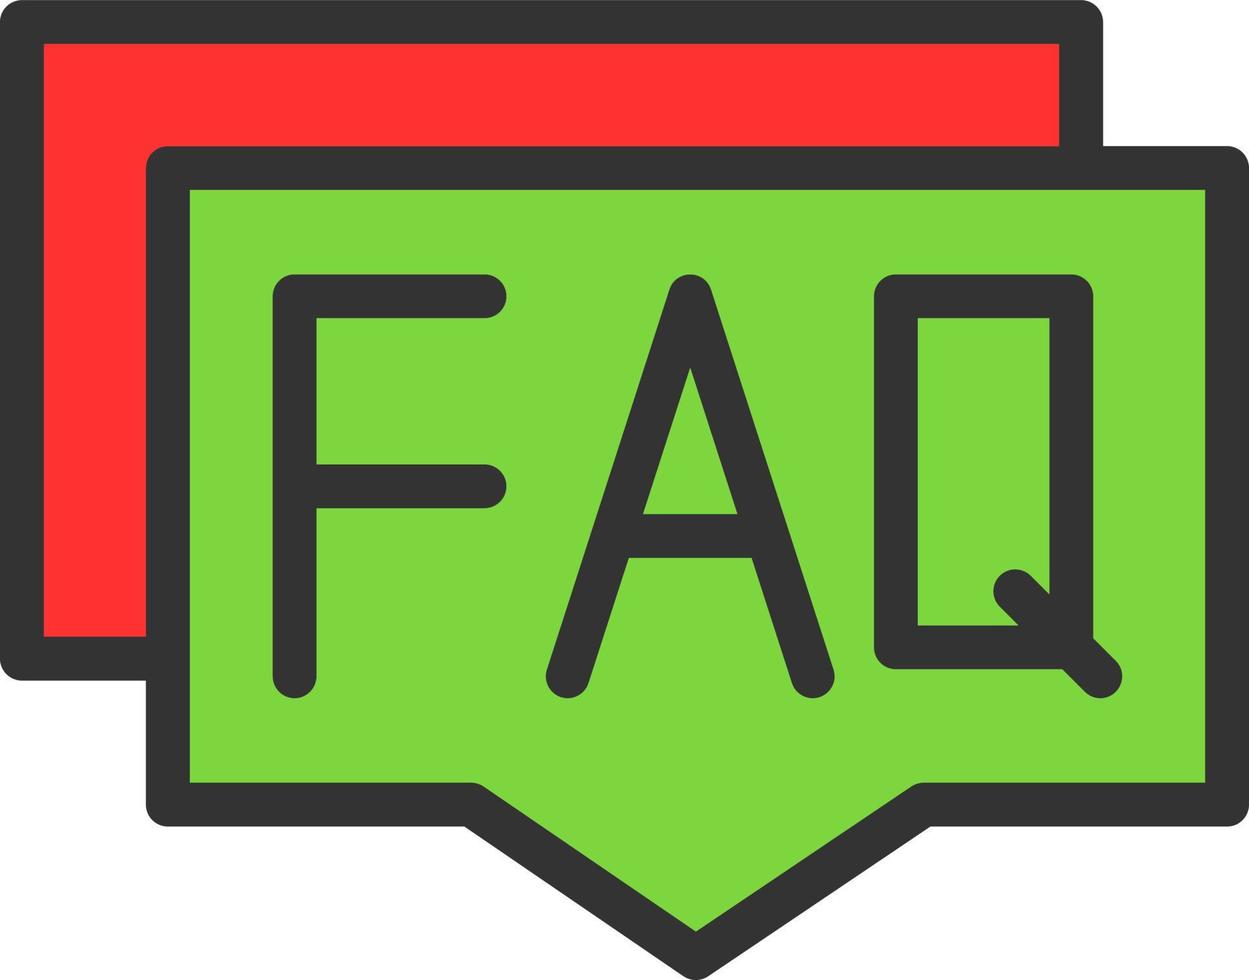 FAQ vettore icona design